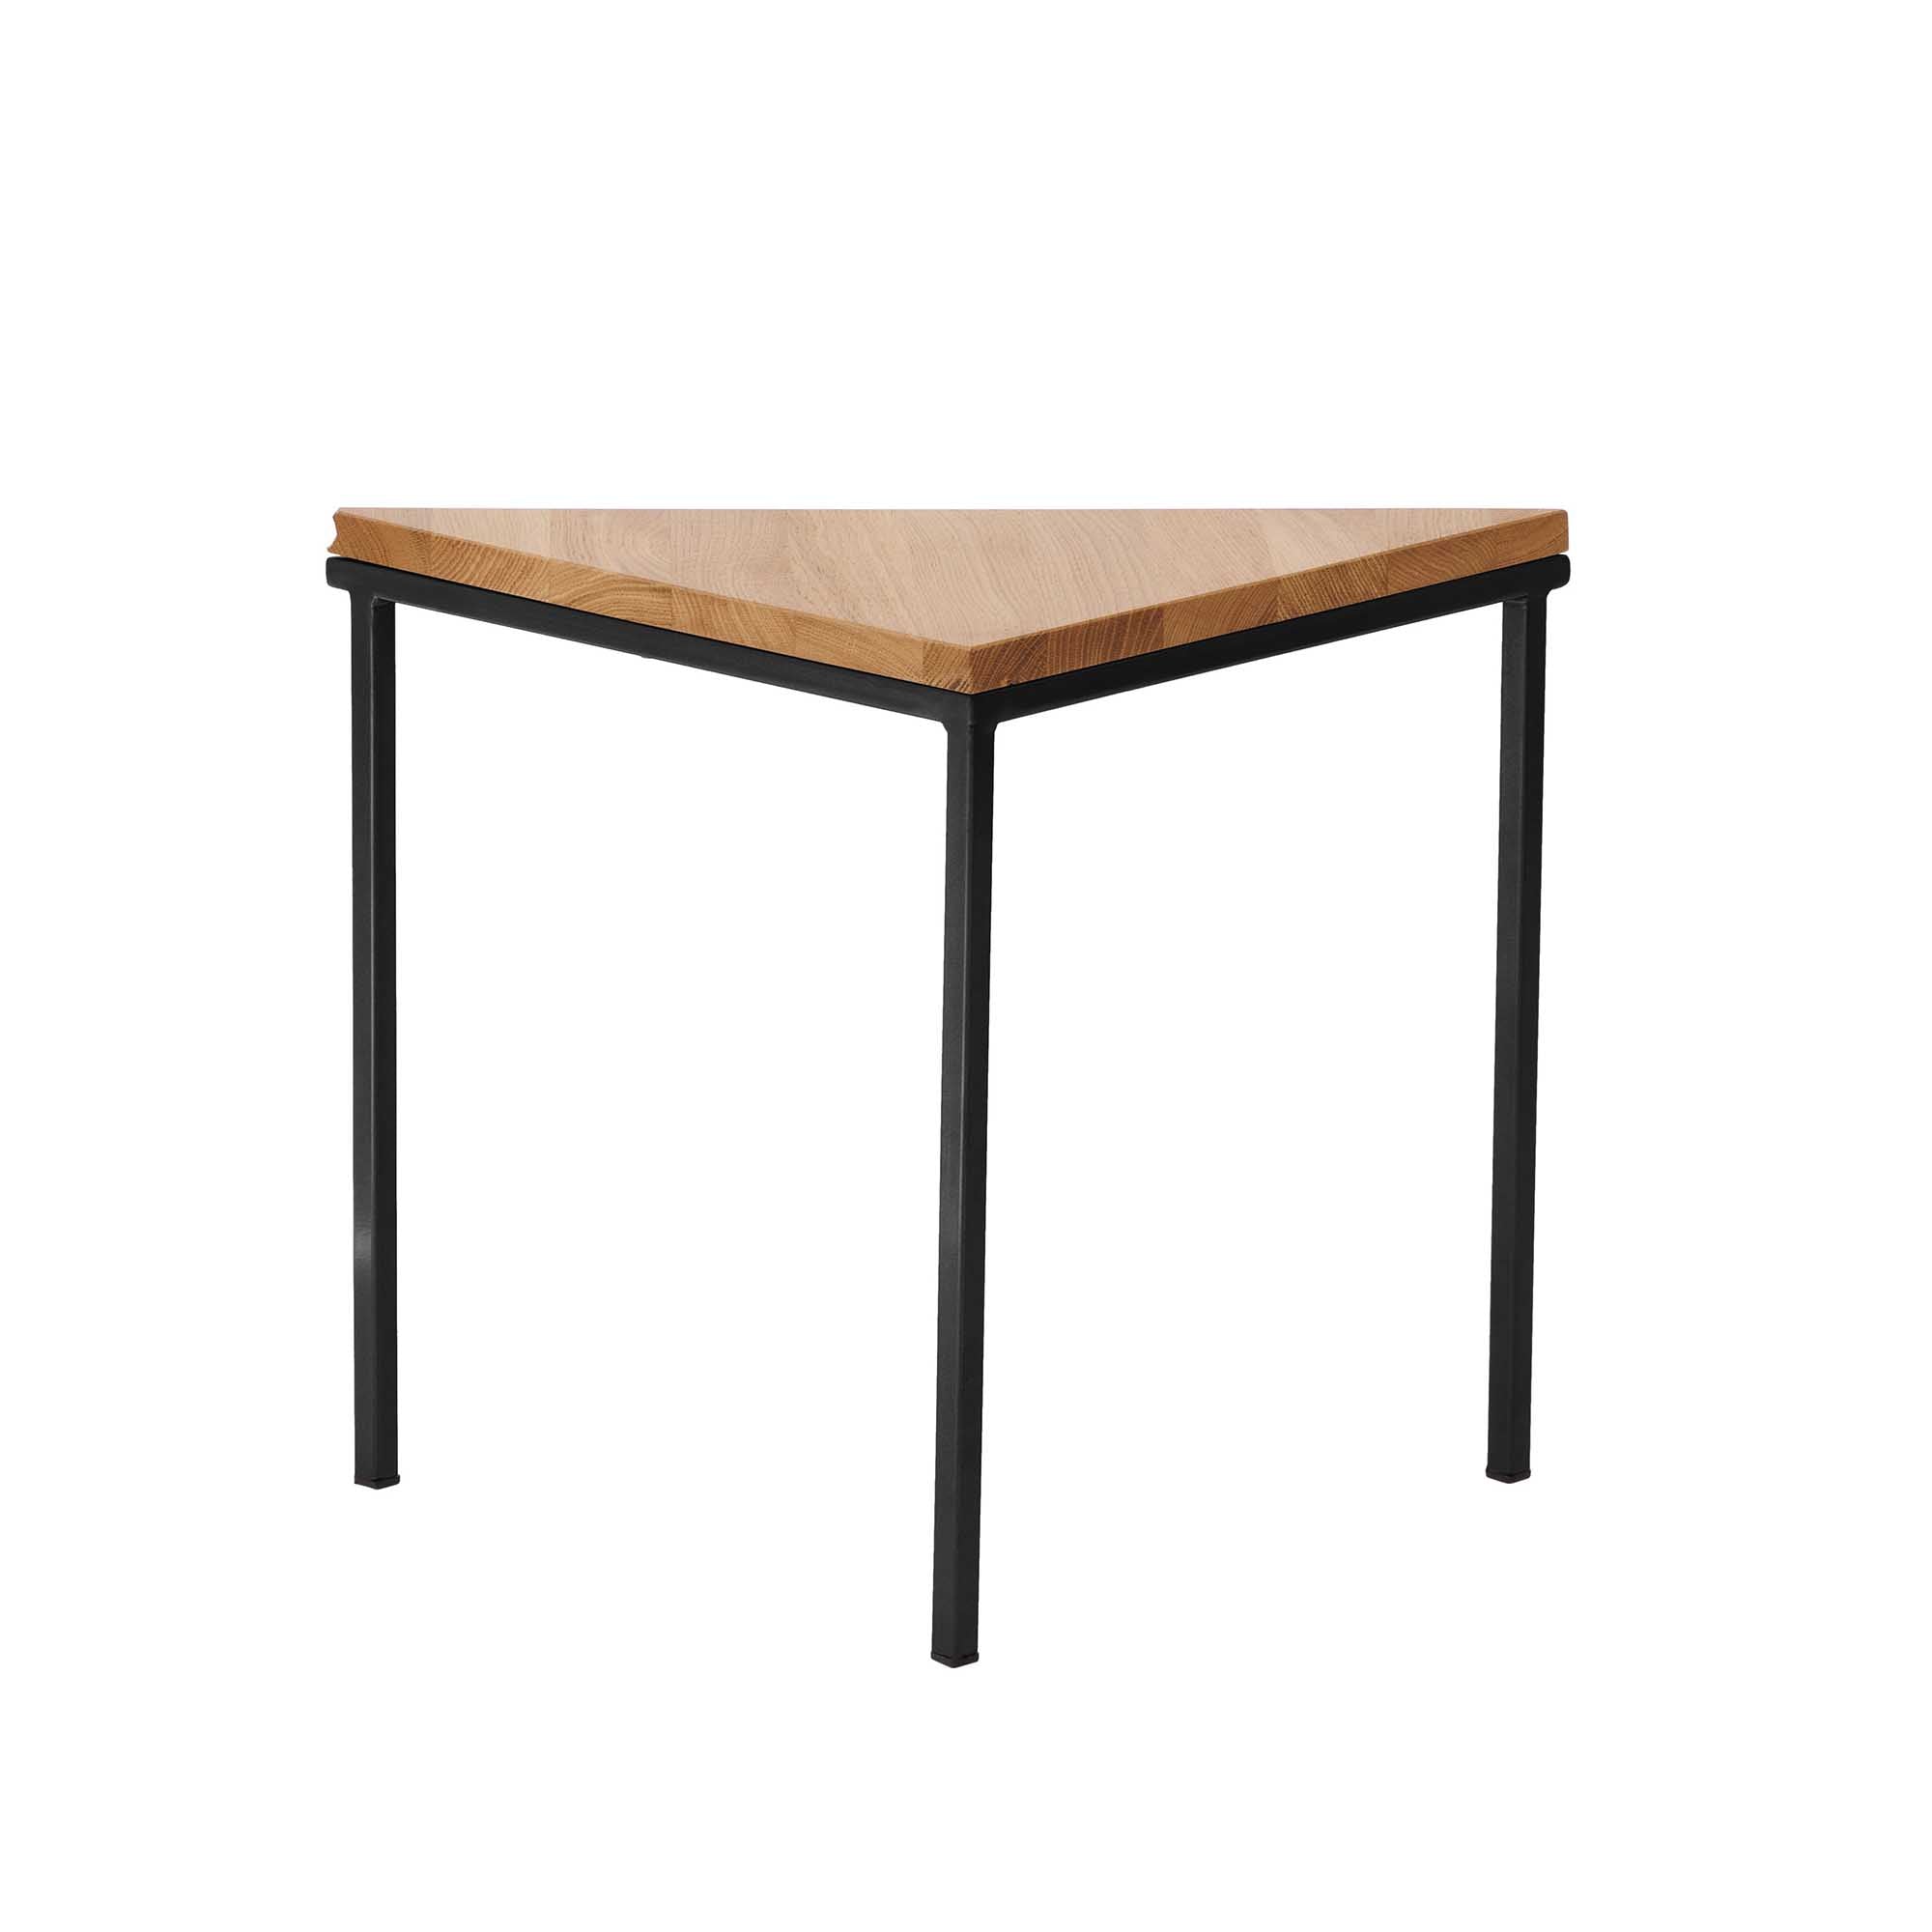 Tripod Table, Oak Wood, Natural Colour black frame, side view